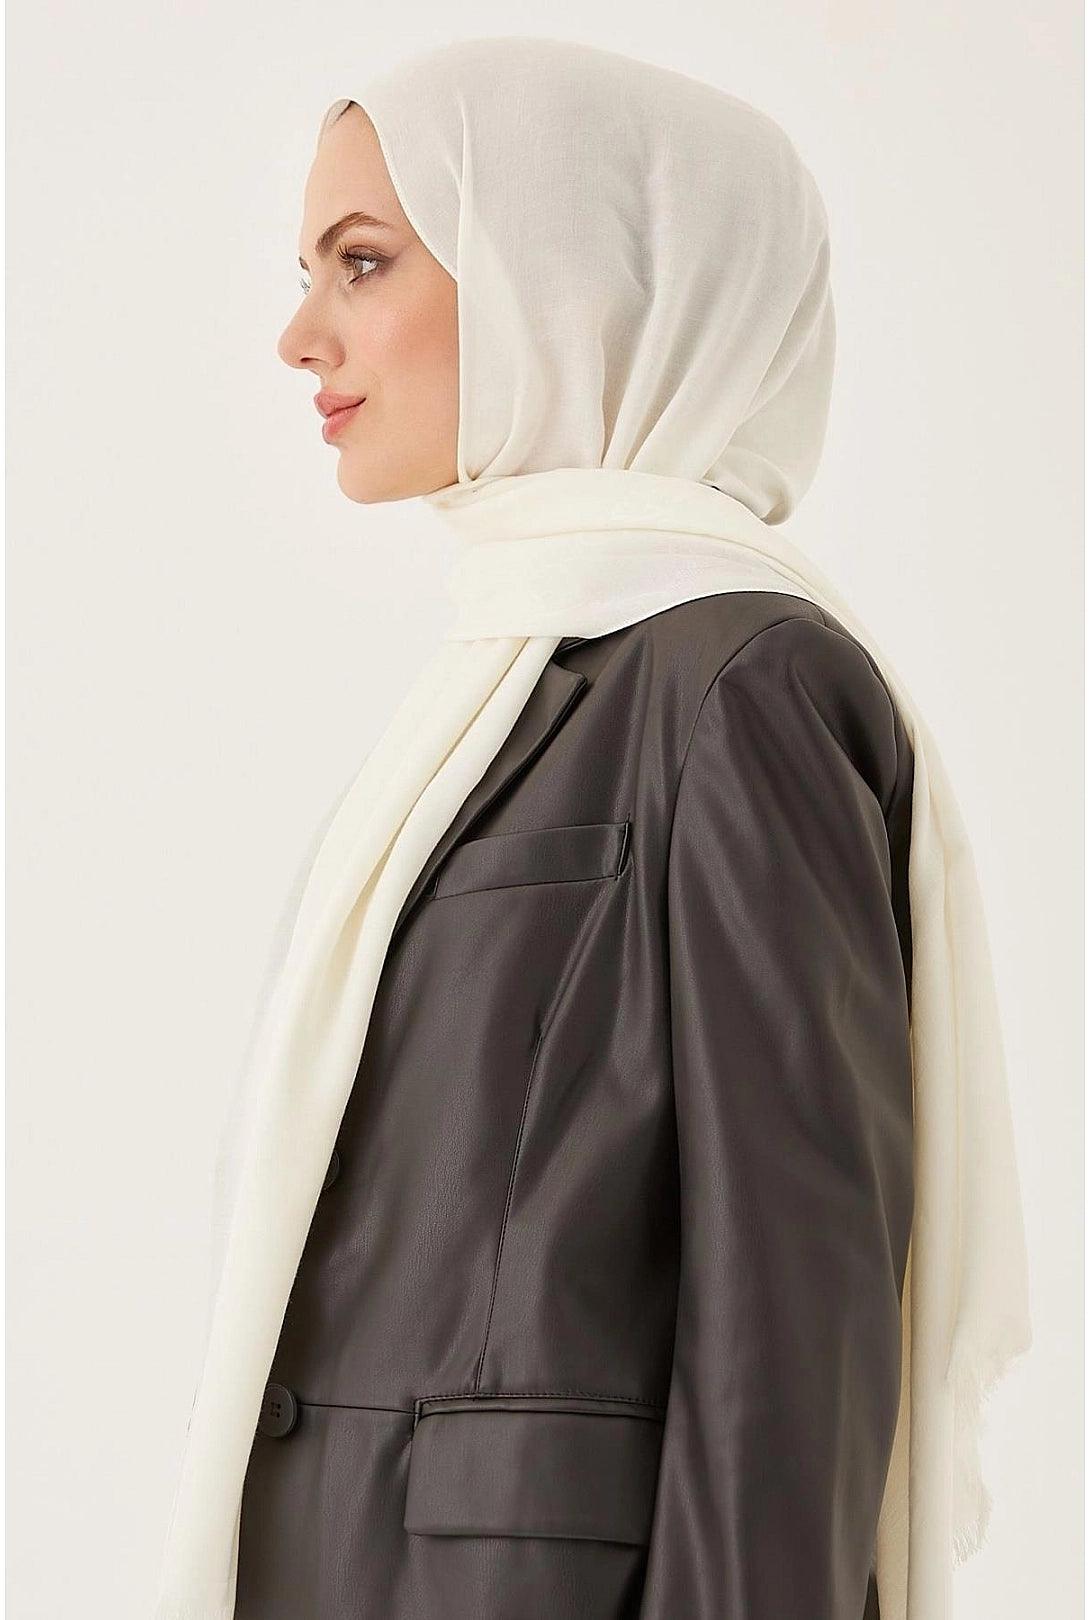 White Cotton Hijab Shawl with Pattern - White